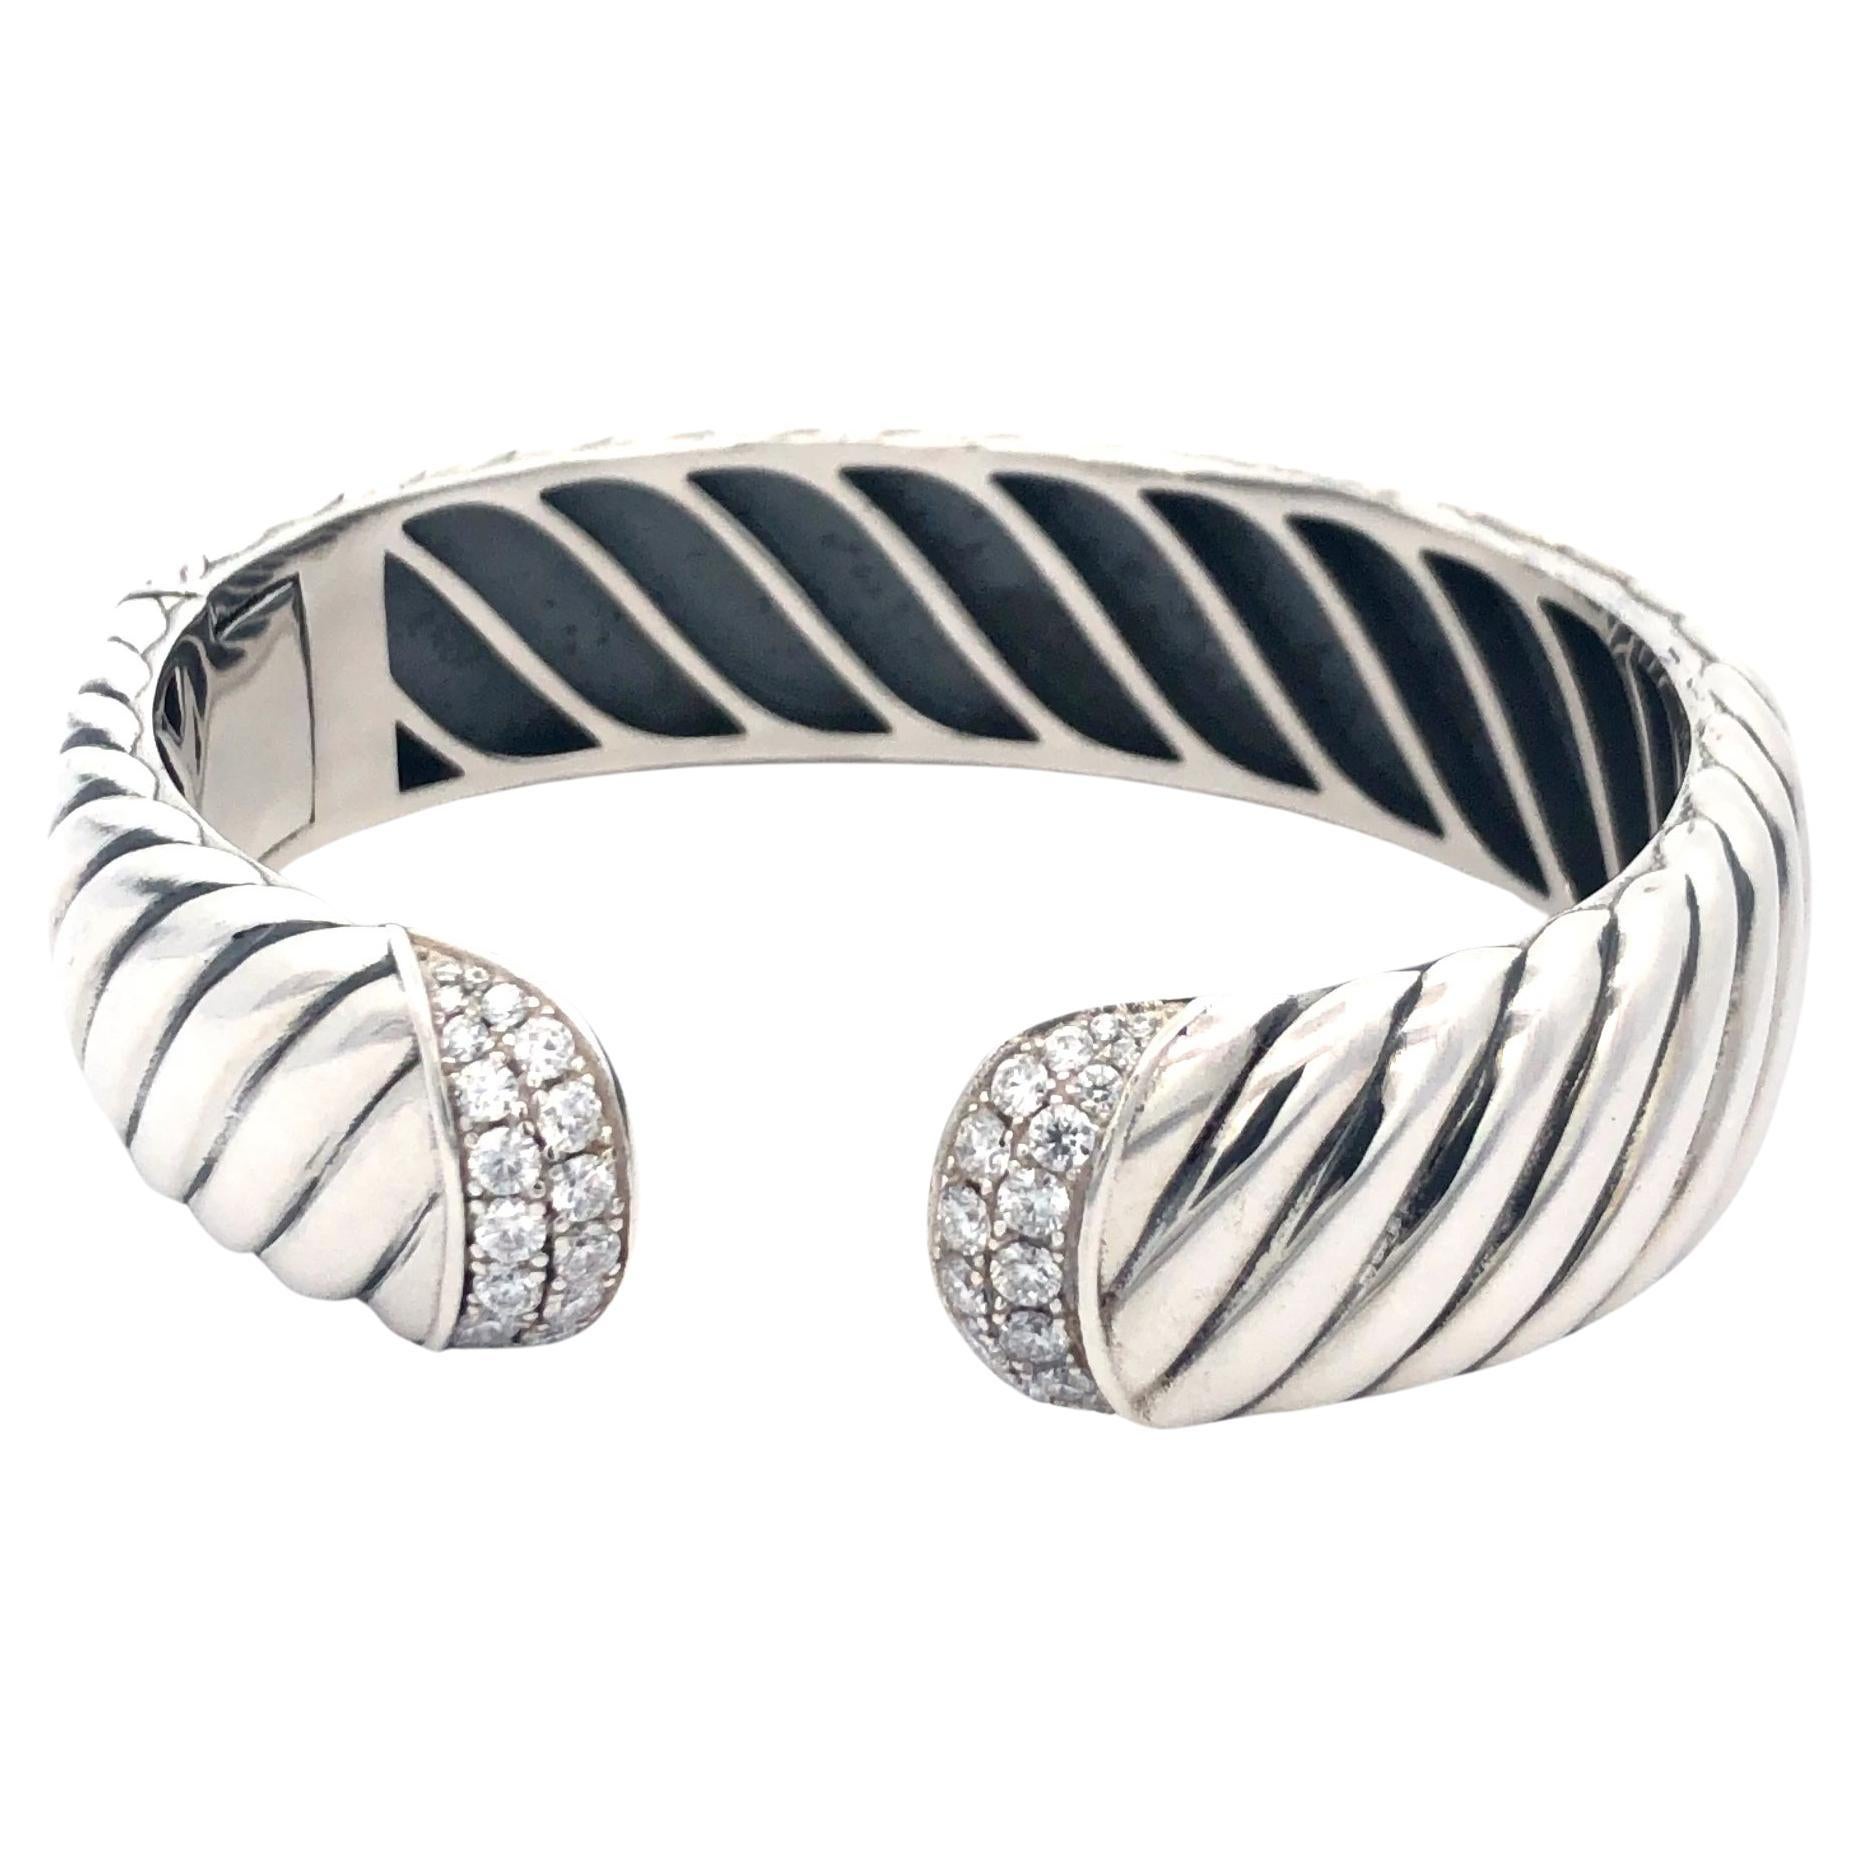 David Yurman Bangle Bracelet With Diamond Tips in Sterling Silver For Sale